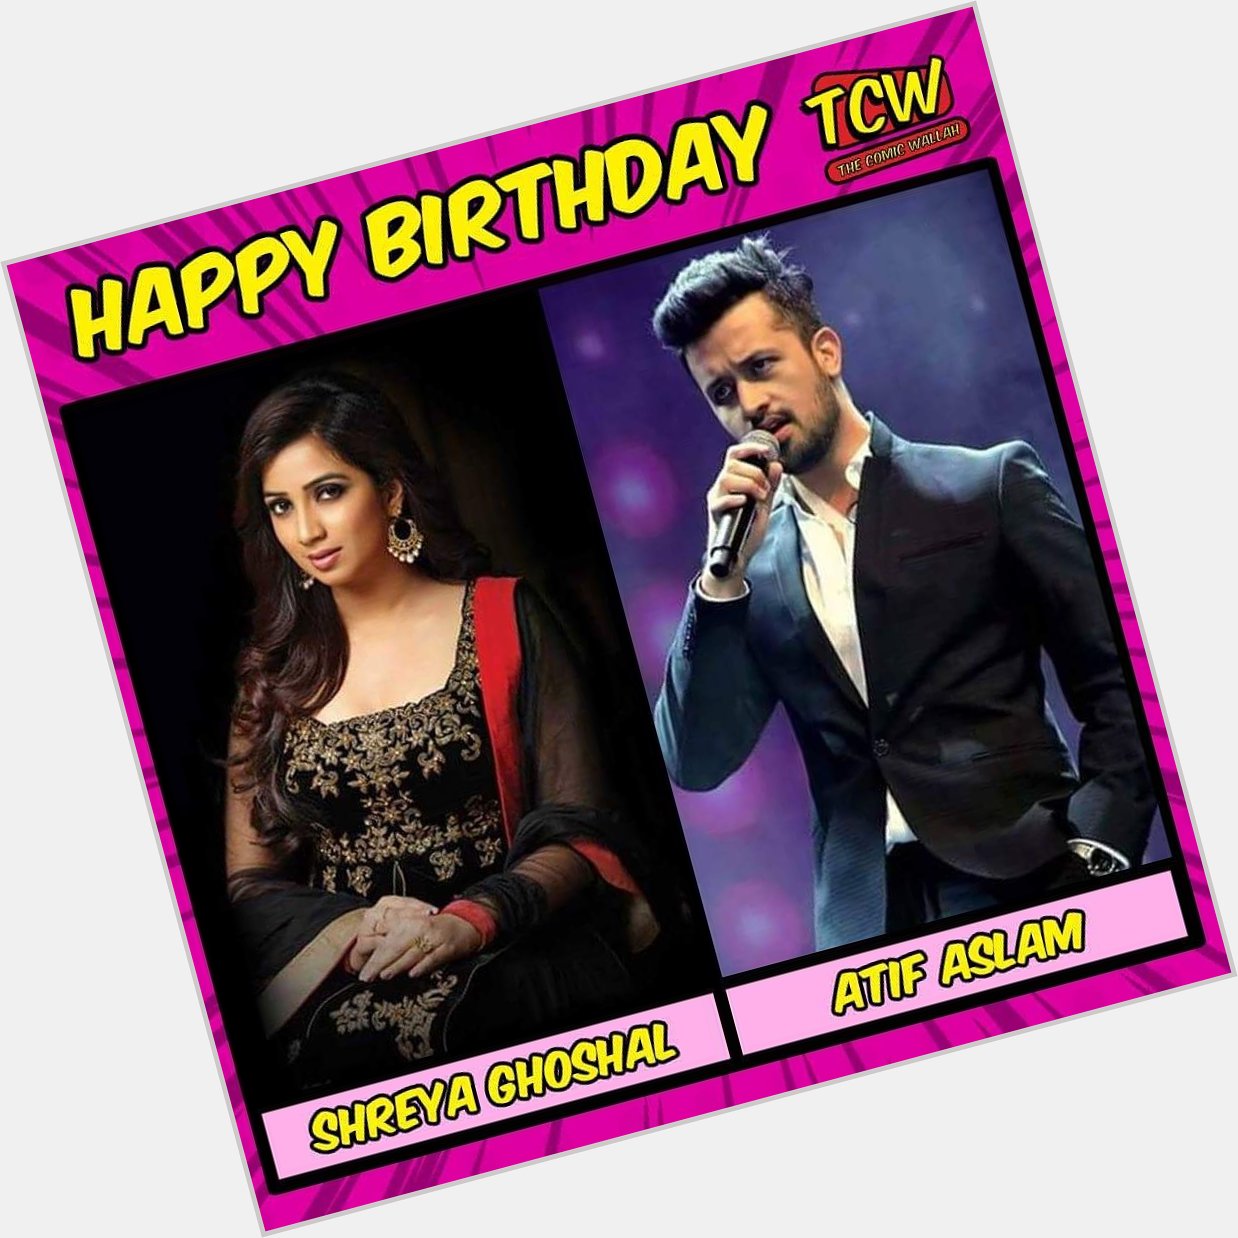 Wishing the talented singers Shreya Ghoshal and Atif Aslam a very happy birthday. 